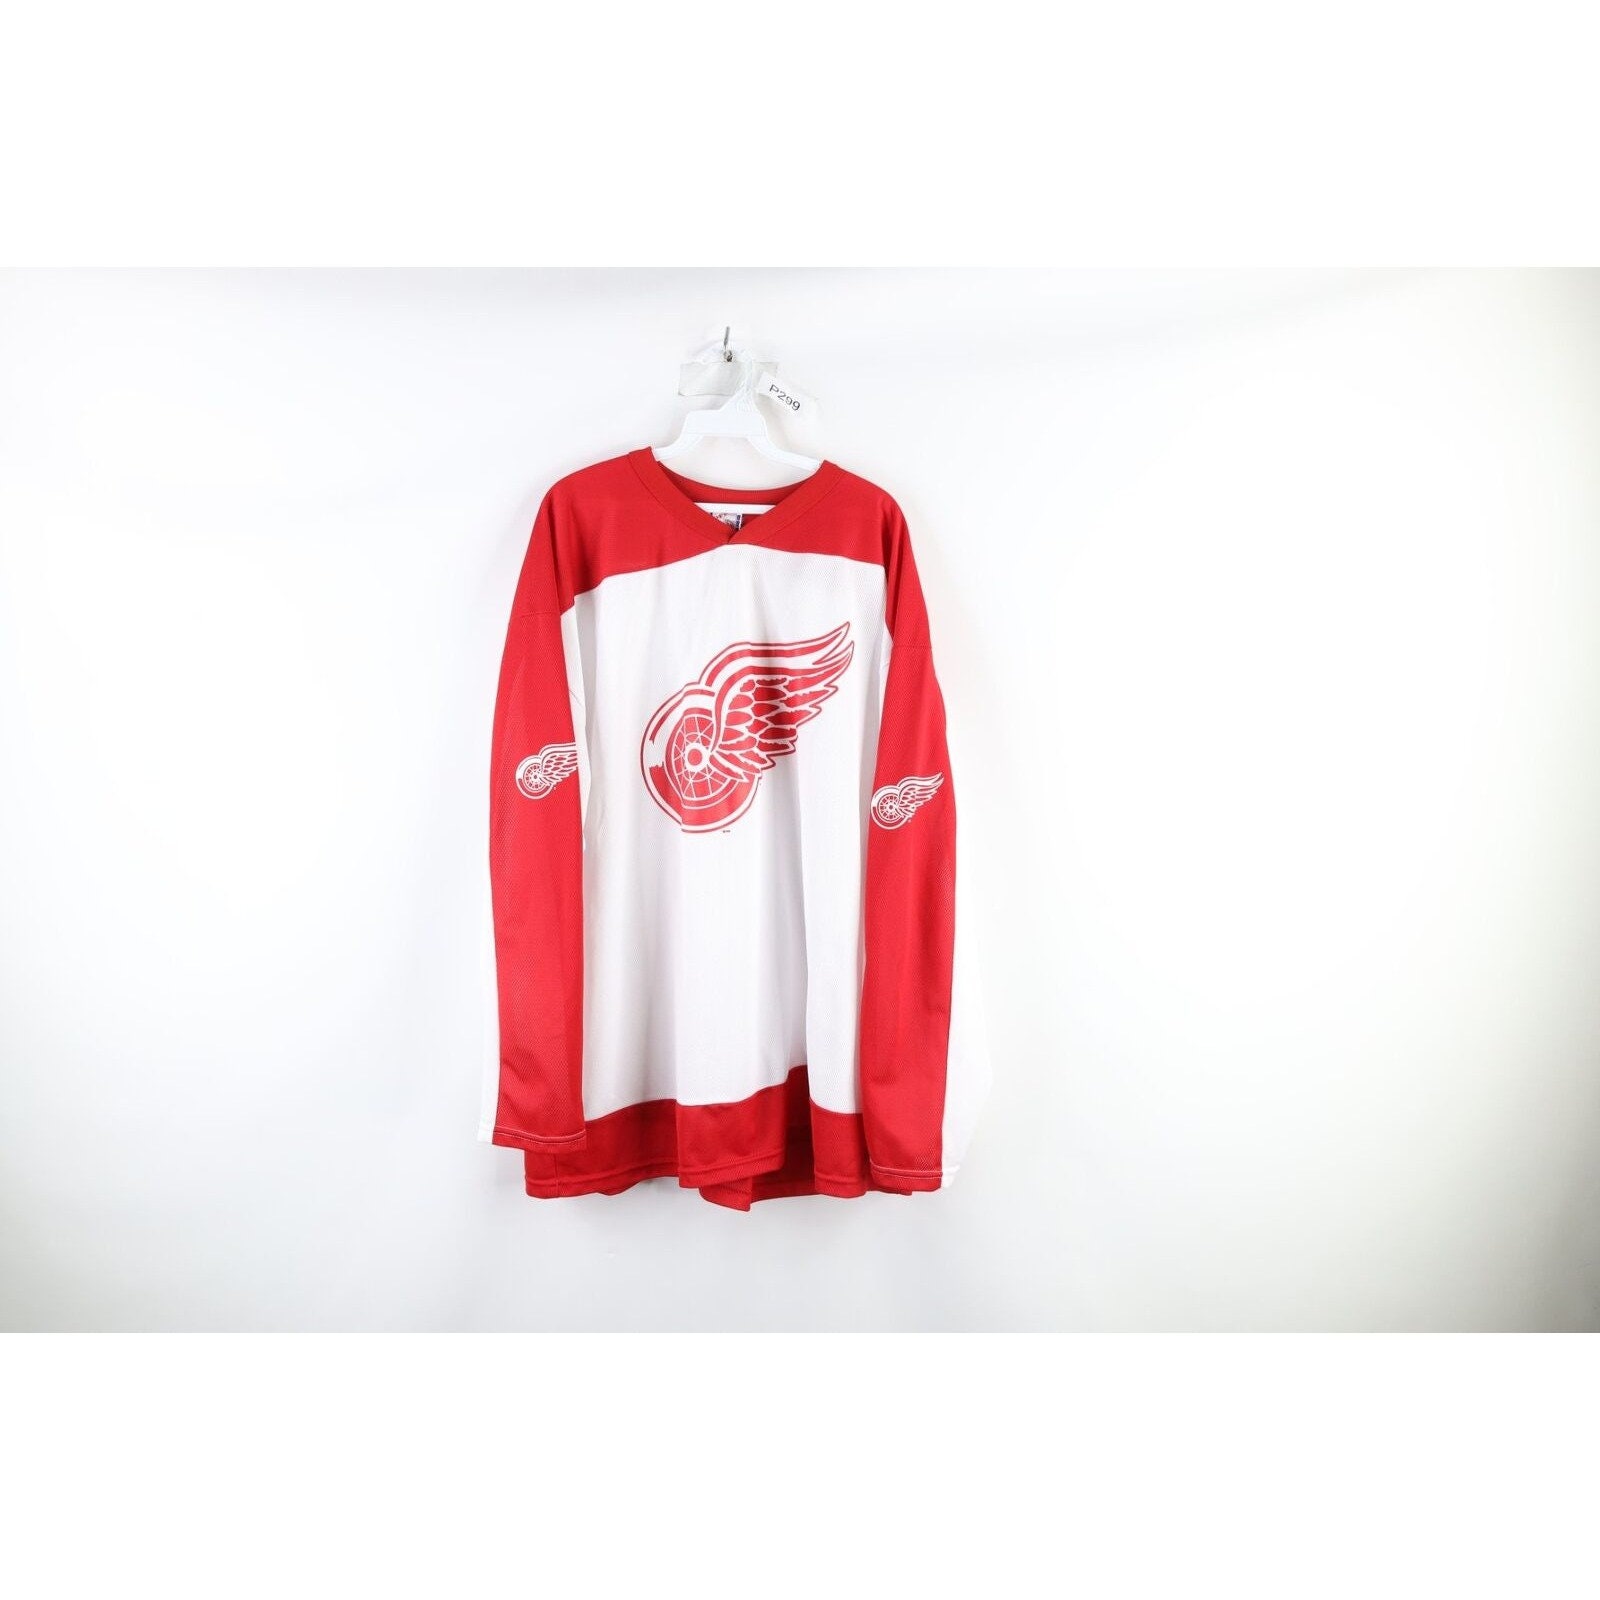 TUPAC SHAKUR Detroit Red Wings Graphic T-Shirt - SIZE… - Gem